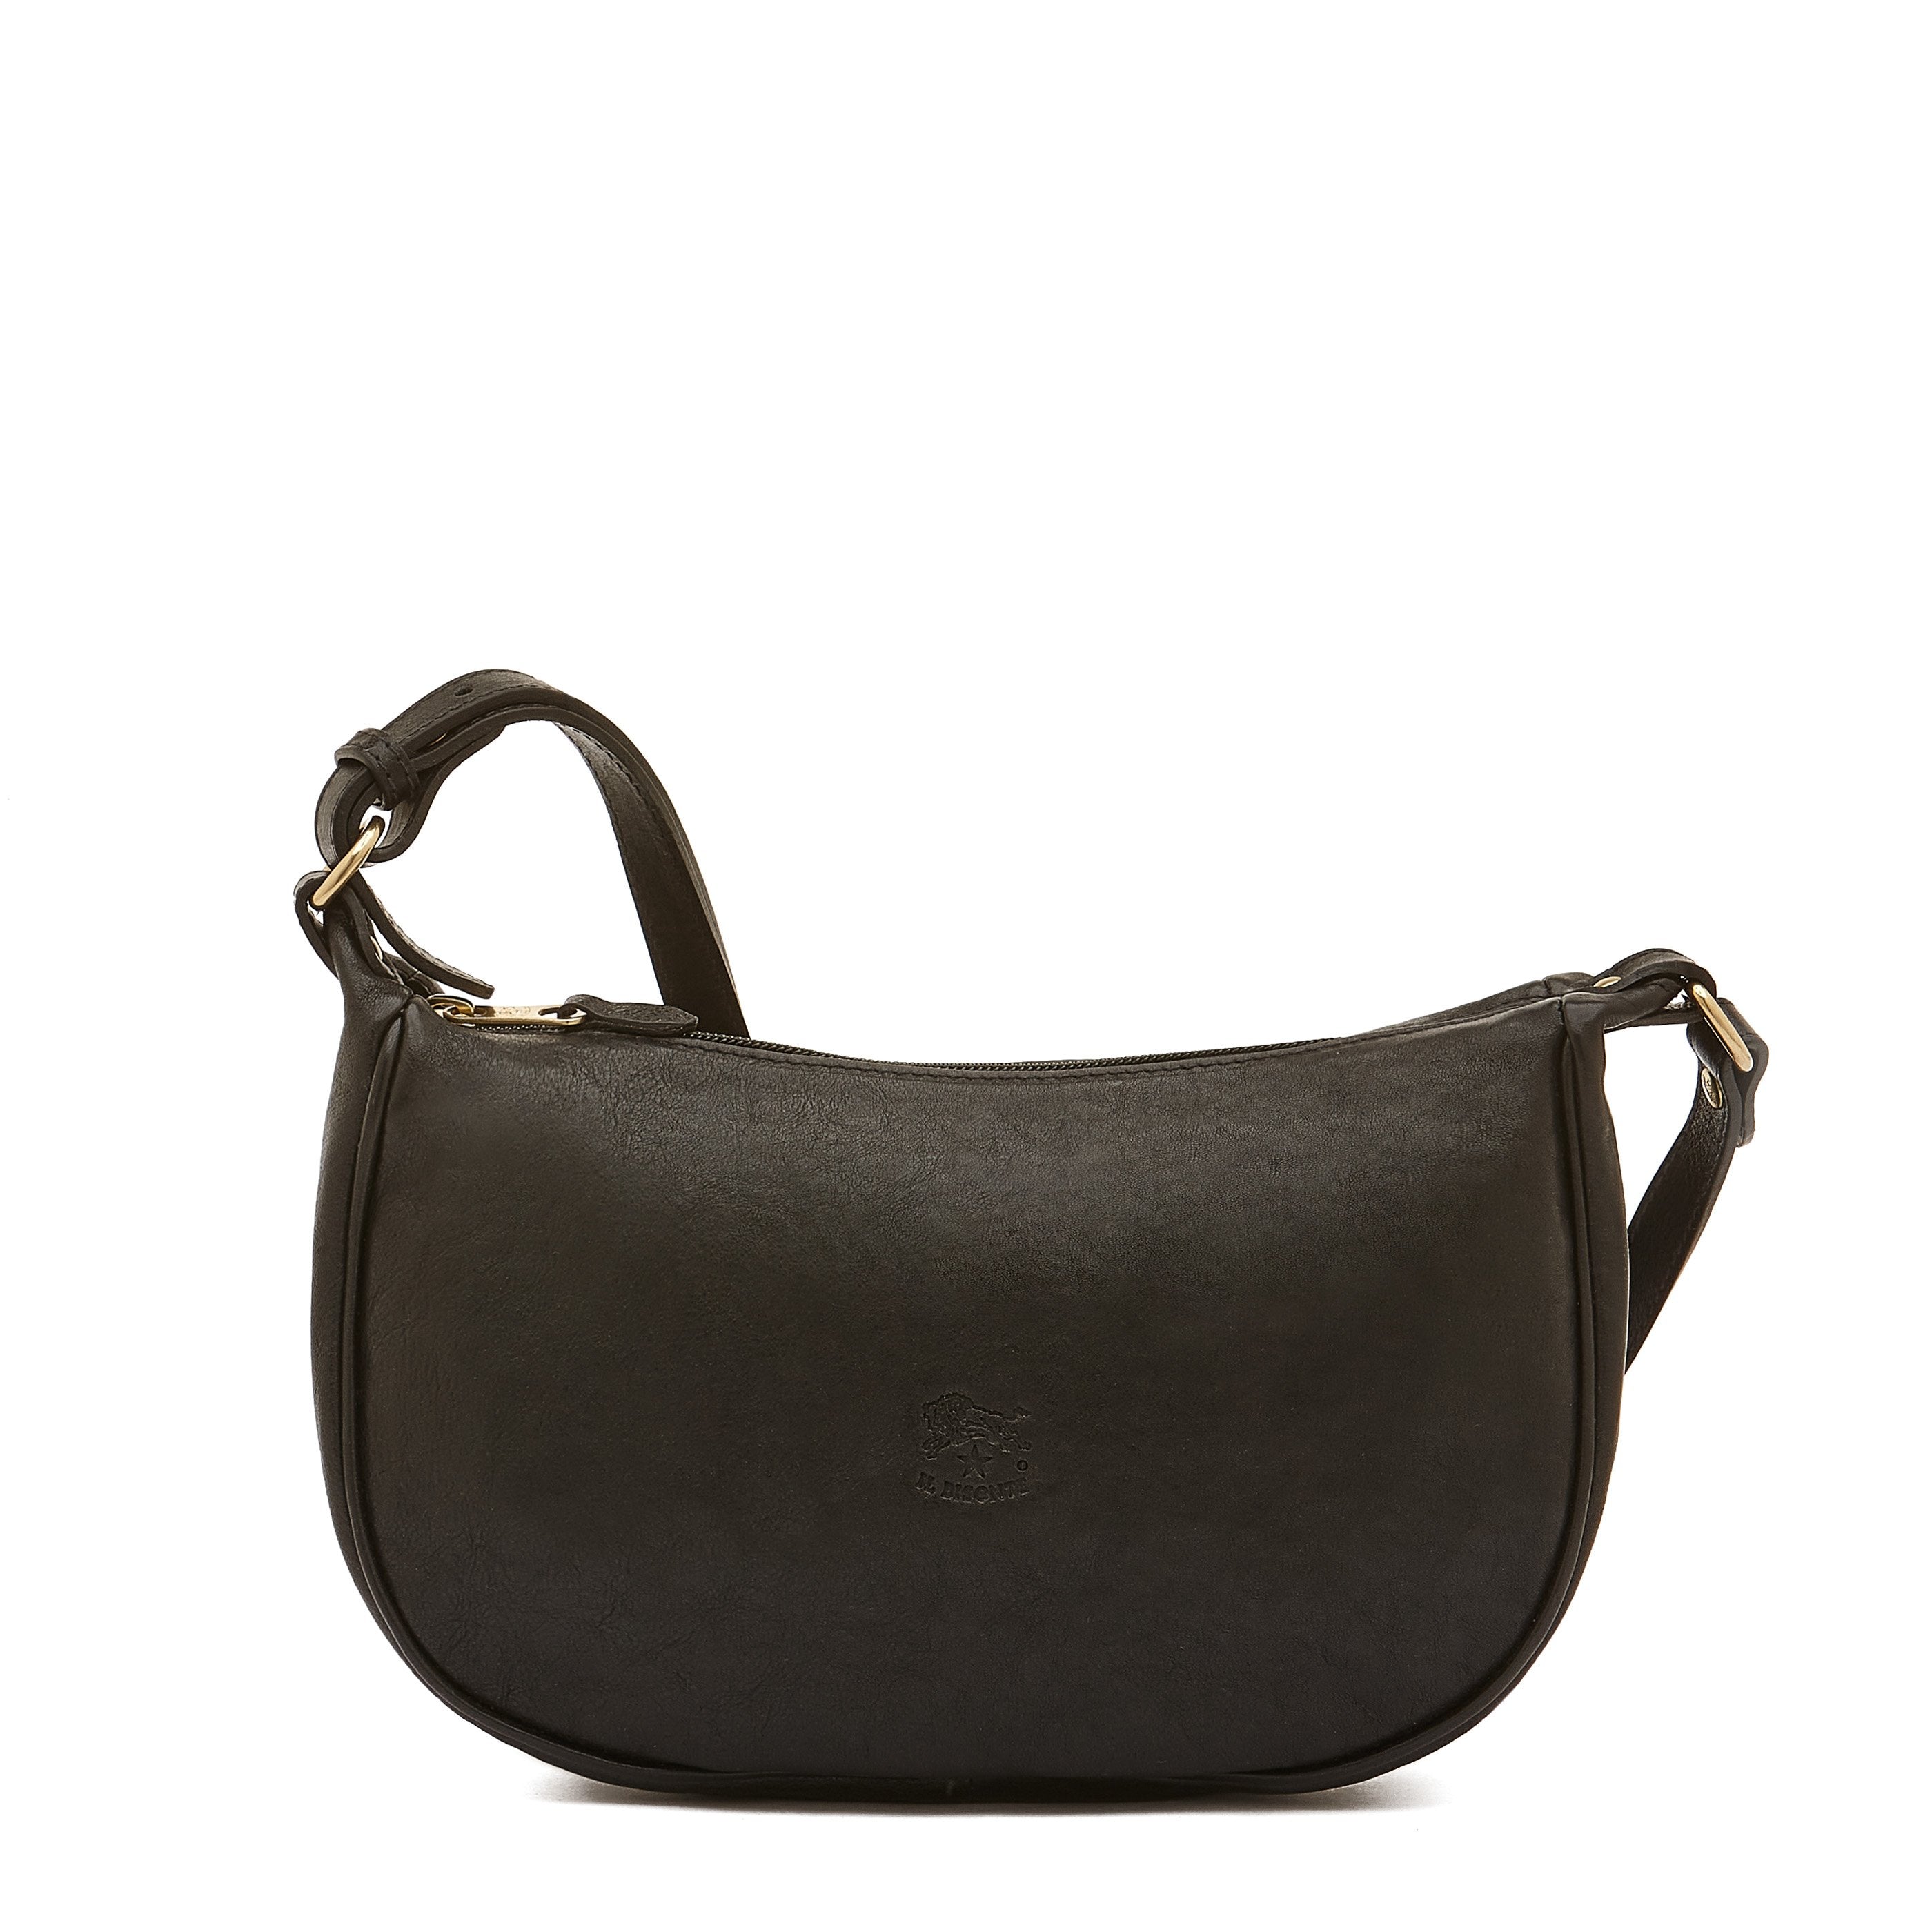 Women's crossbody bag in vintage leather color black